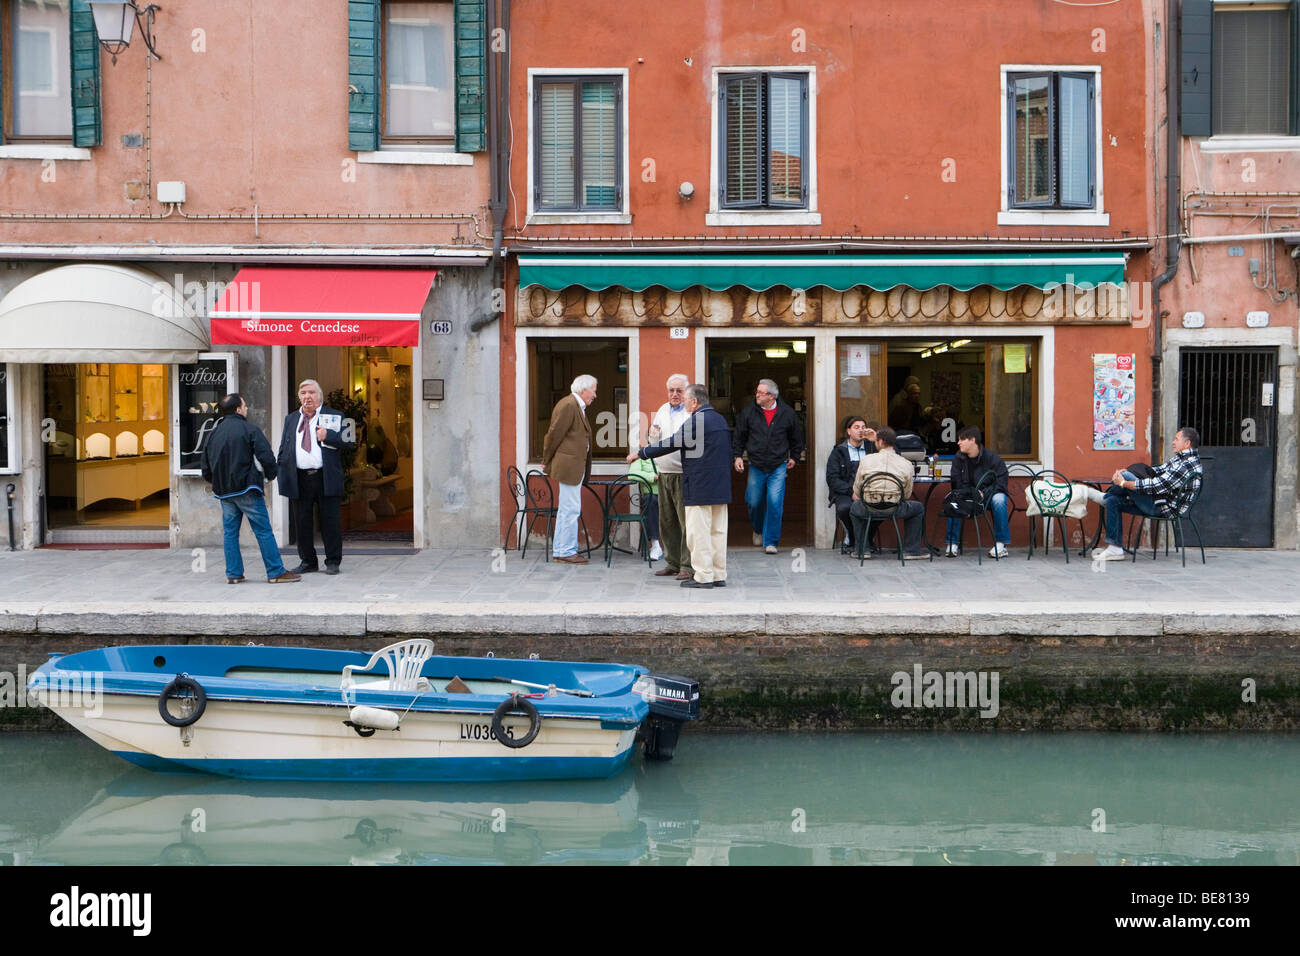 Männer im Gespräch vor einer Bar, Straßenszene am Rio dei Vetrai Kanal, Murano, Veneto, Italien Stockfoto